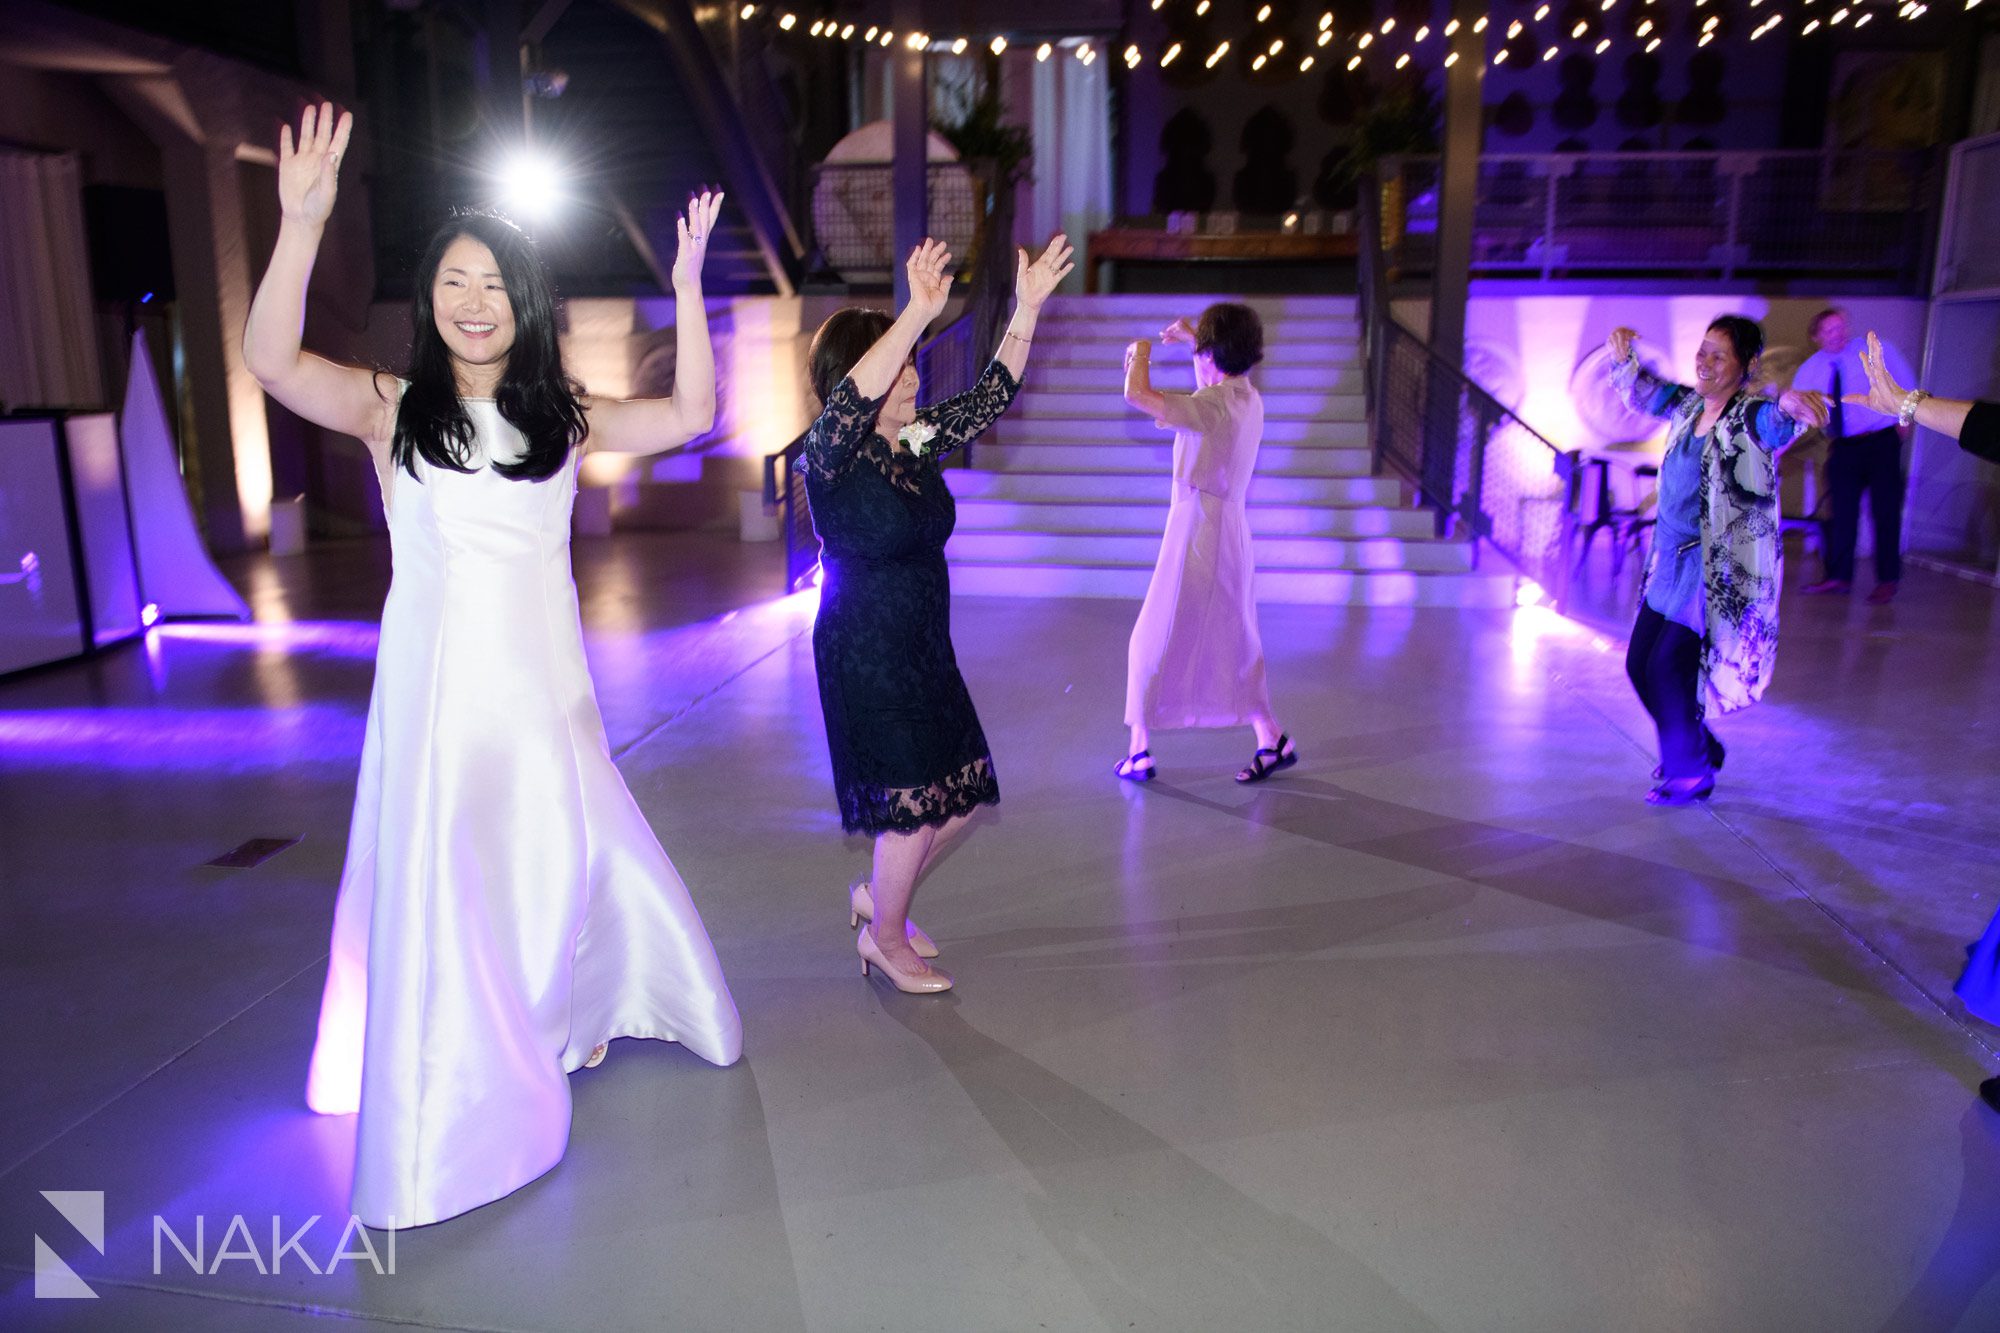 chicago loft wedding reception dancing picture